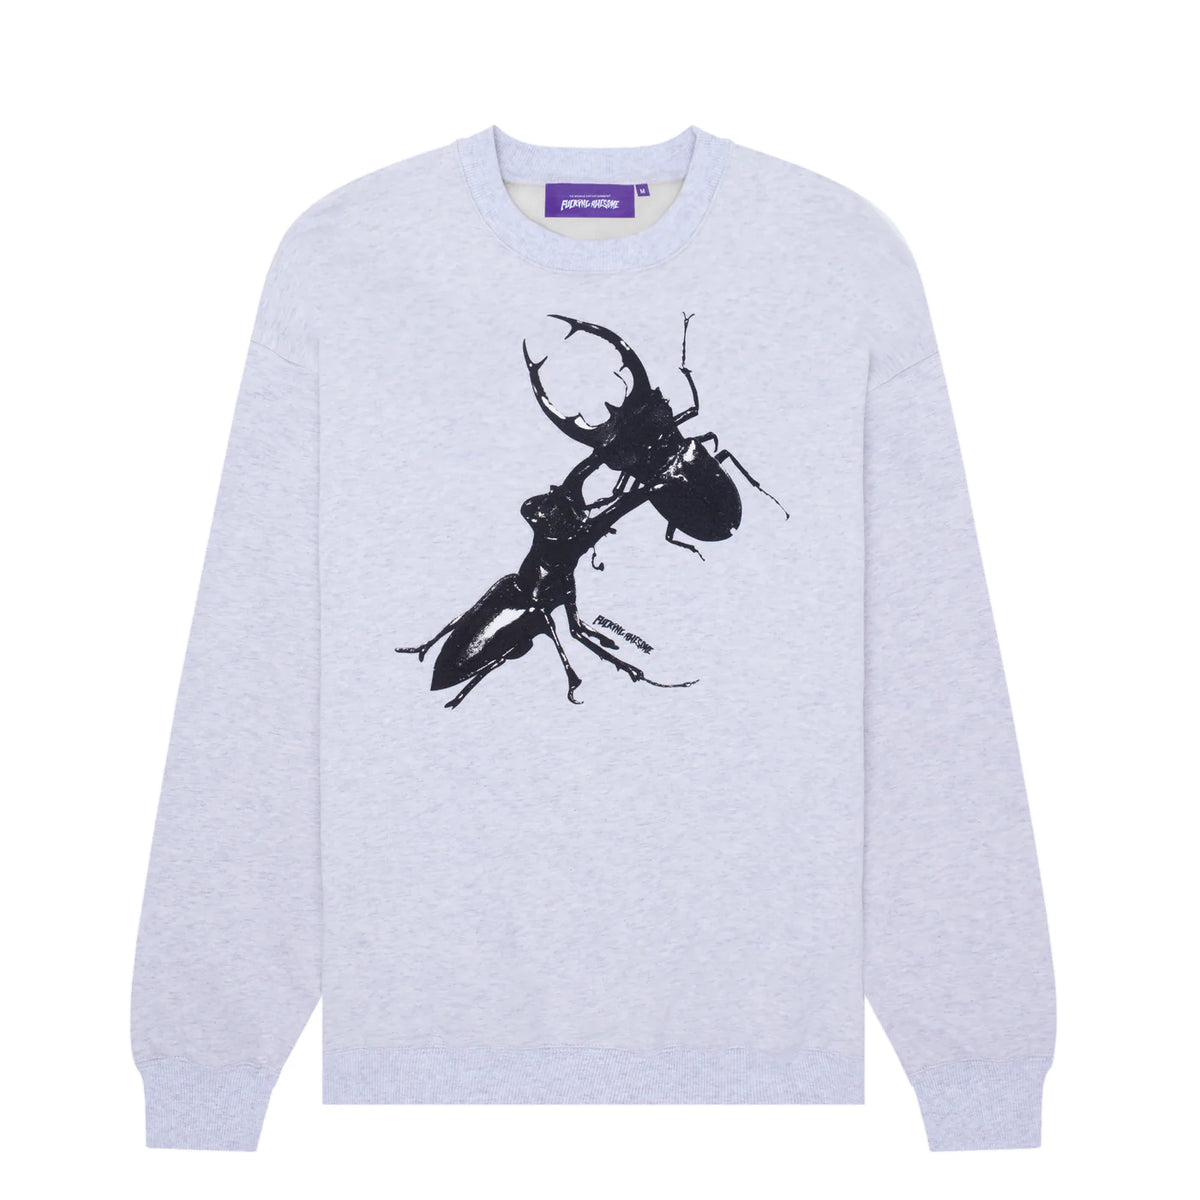 Beetle Battle Crewneck Sweatshirt in Heather Grey by Fucking